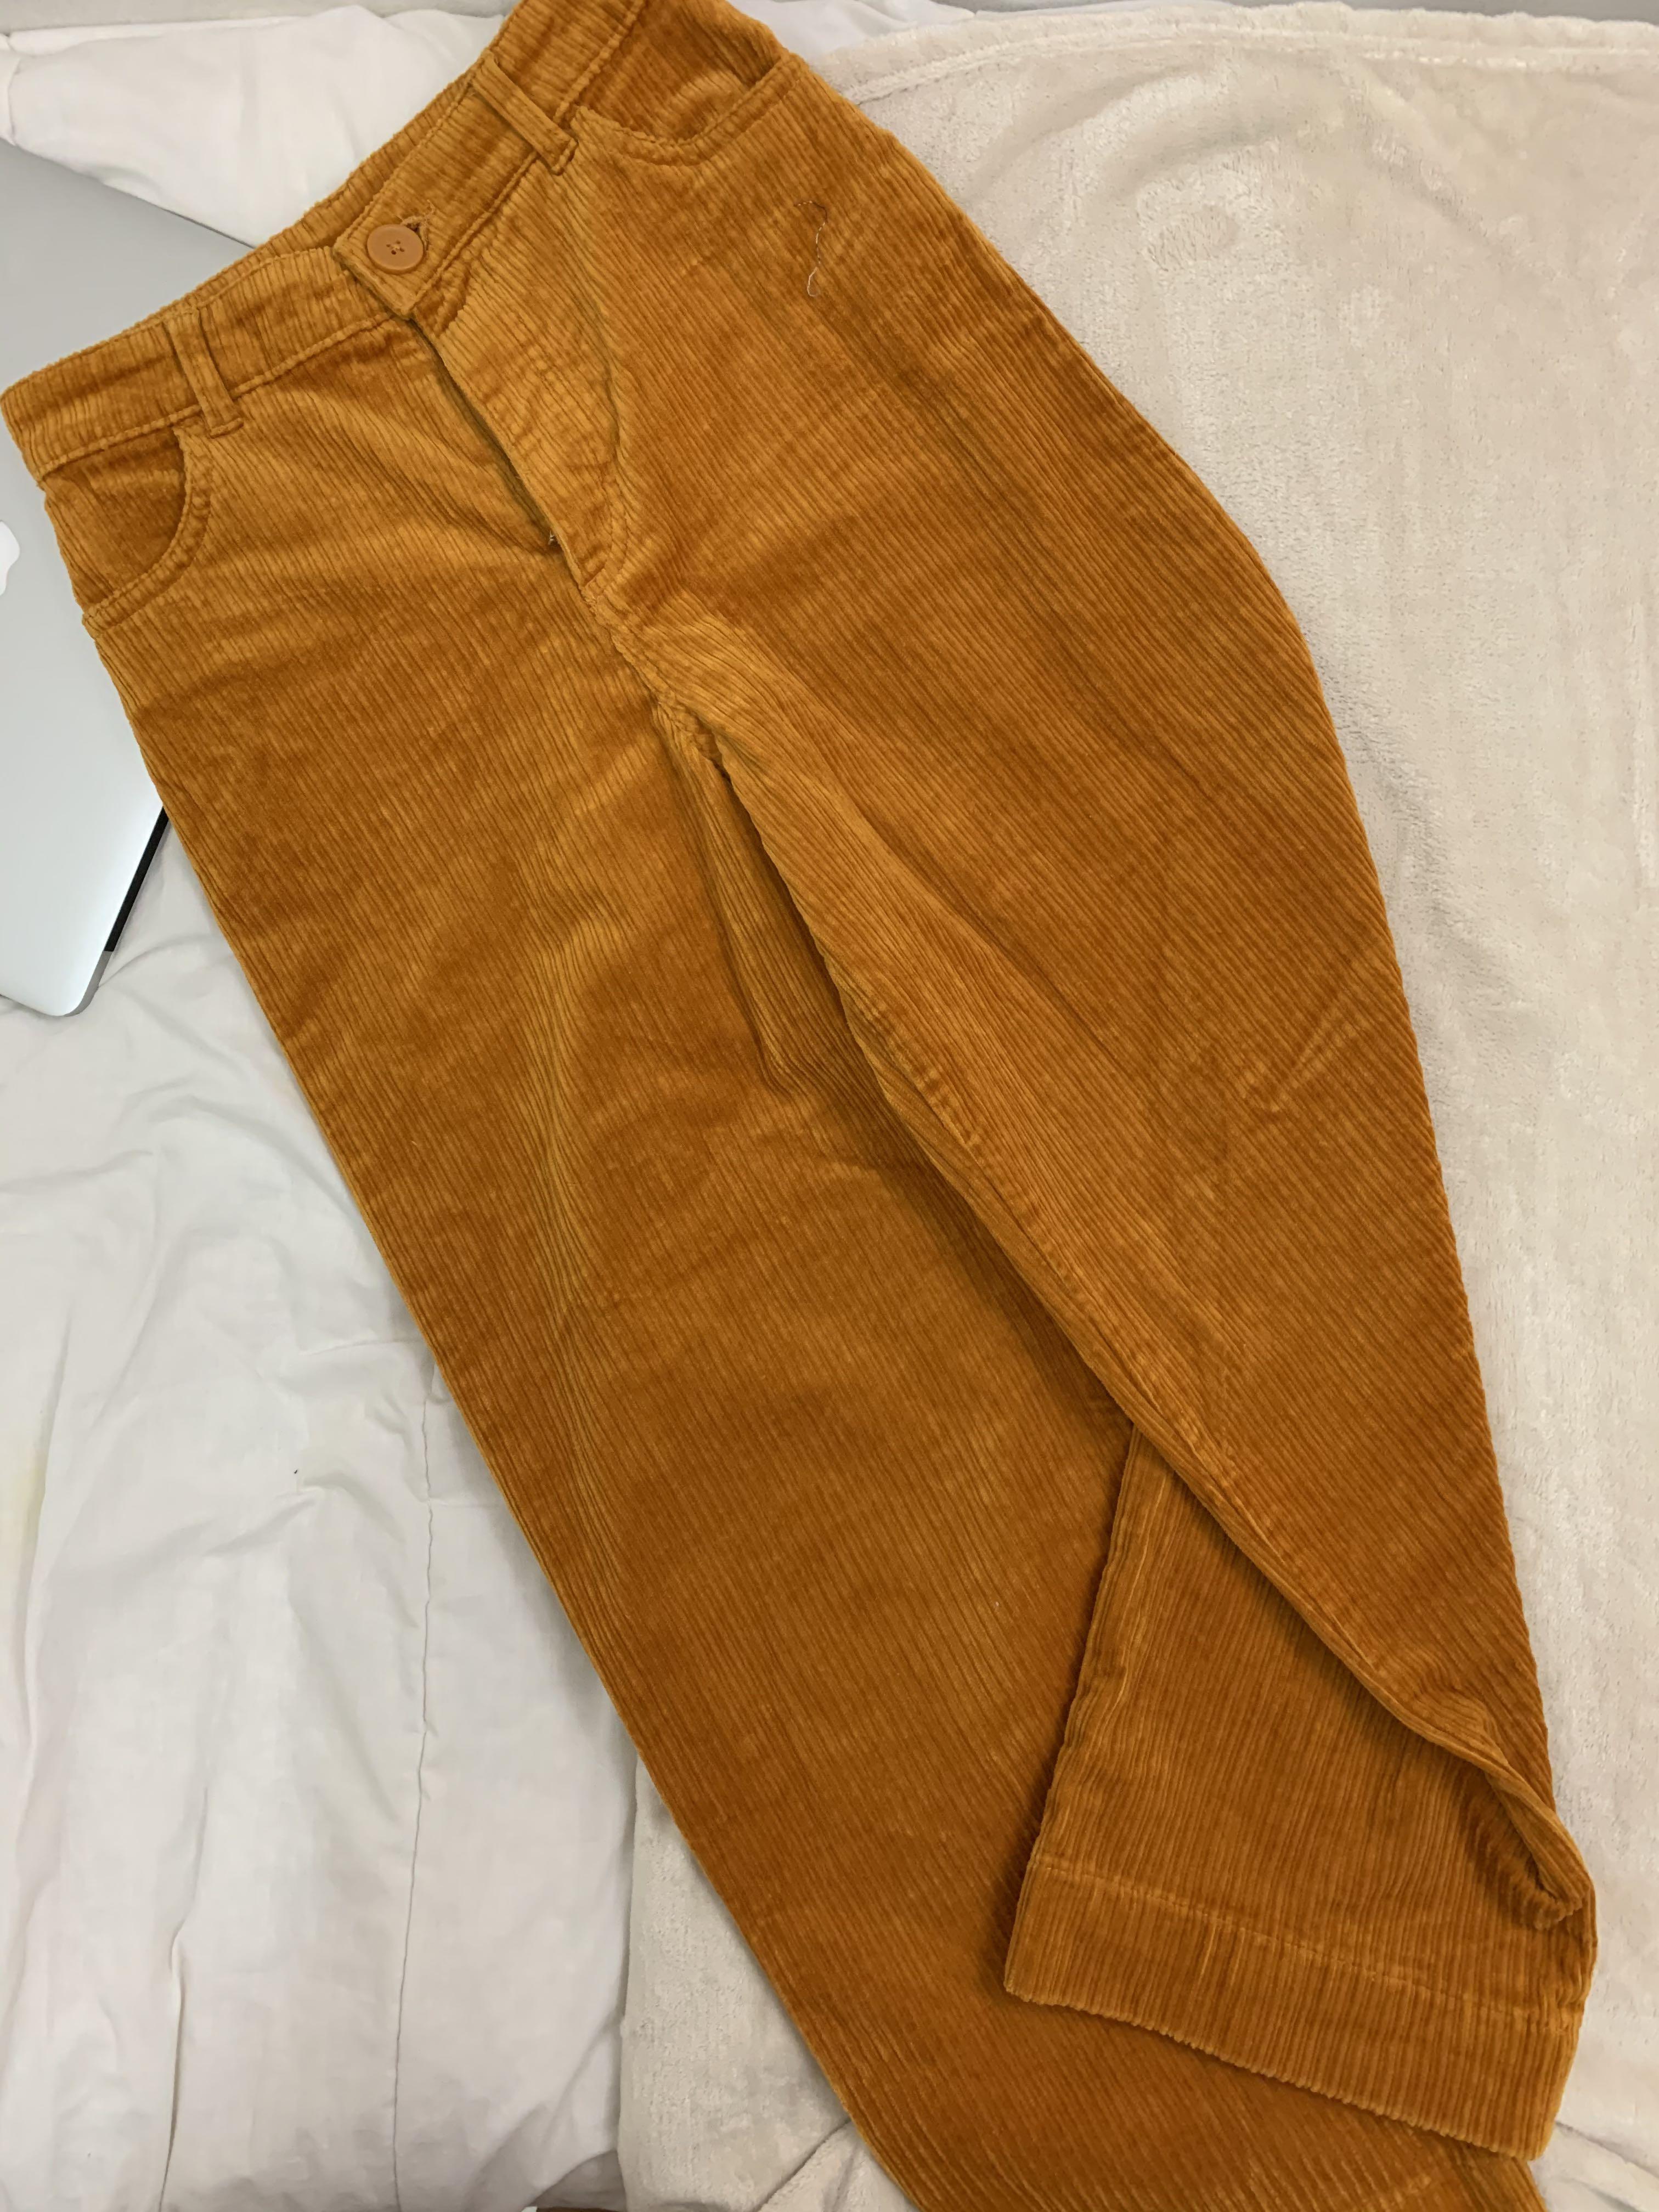 Monki corduroy cargo pants in brown